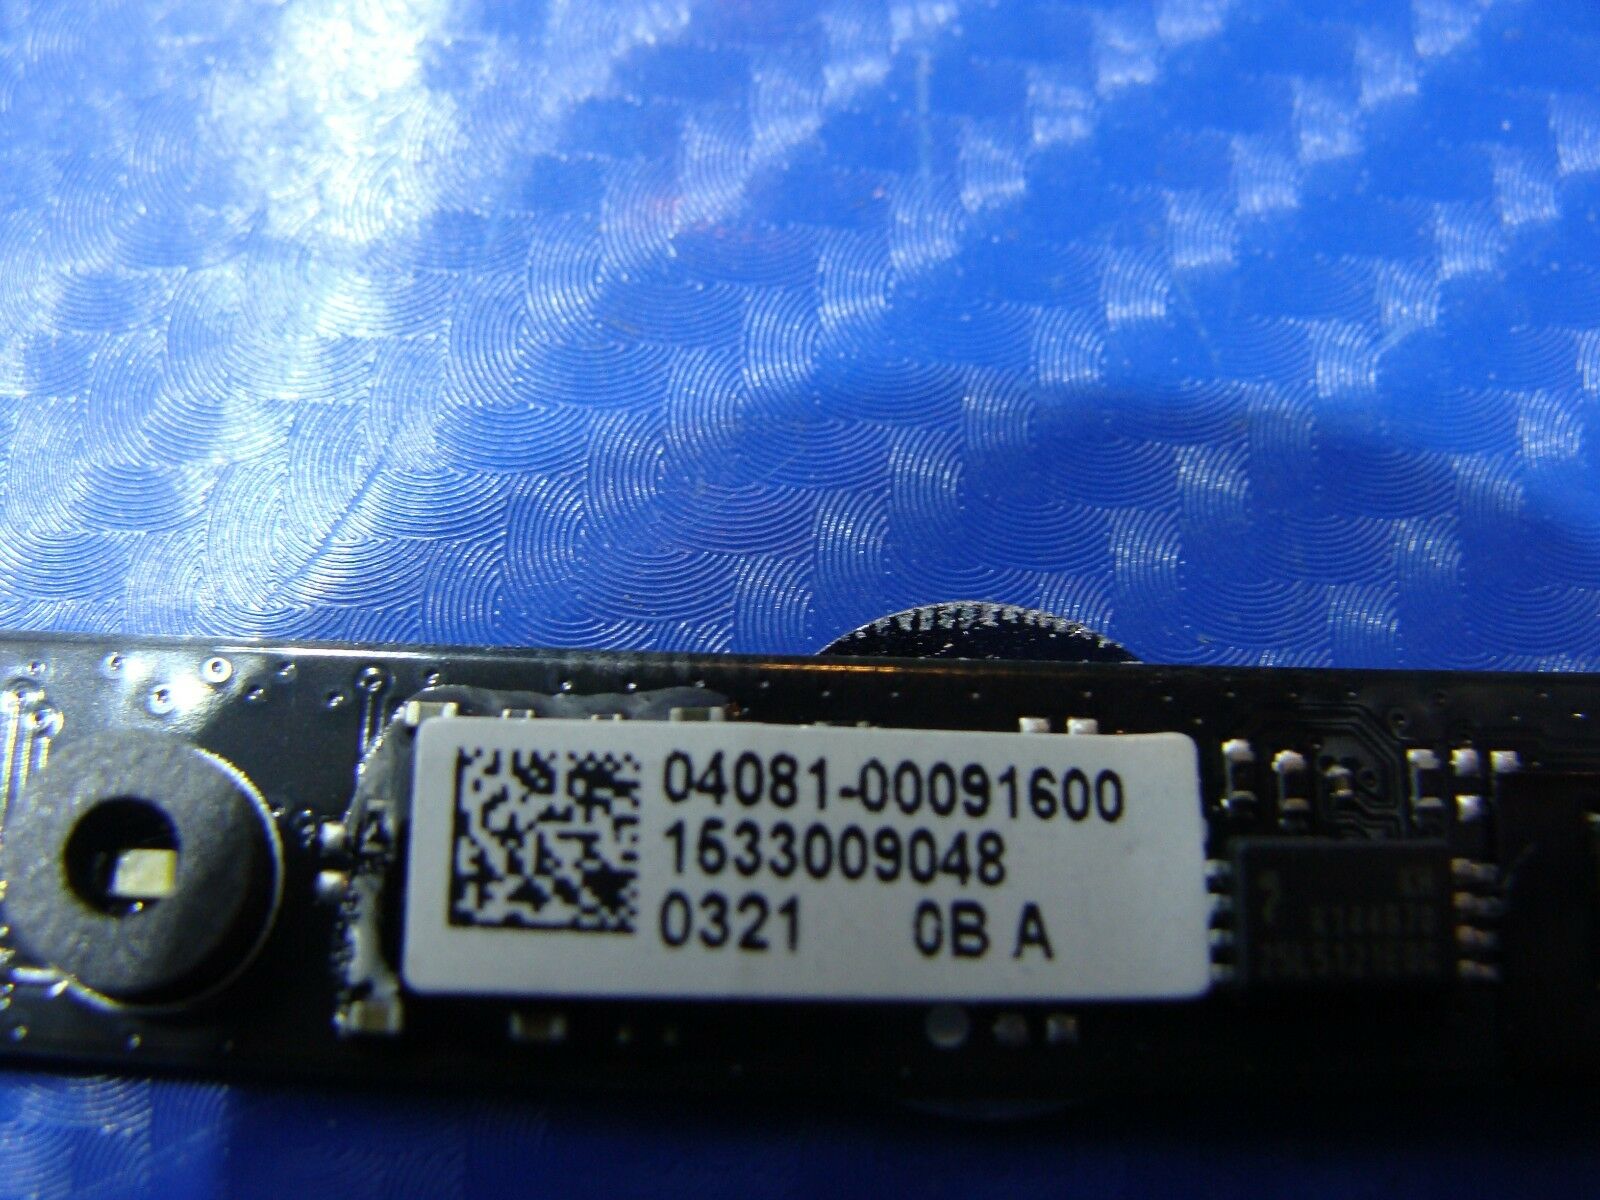 Asus Chromebook C300MA-DH02-LB 13.3